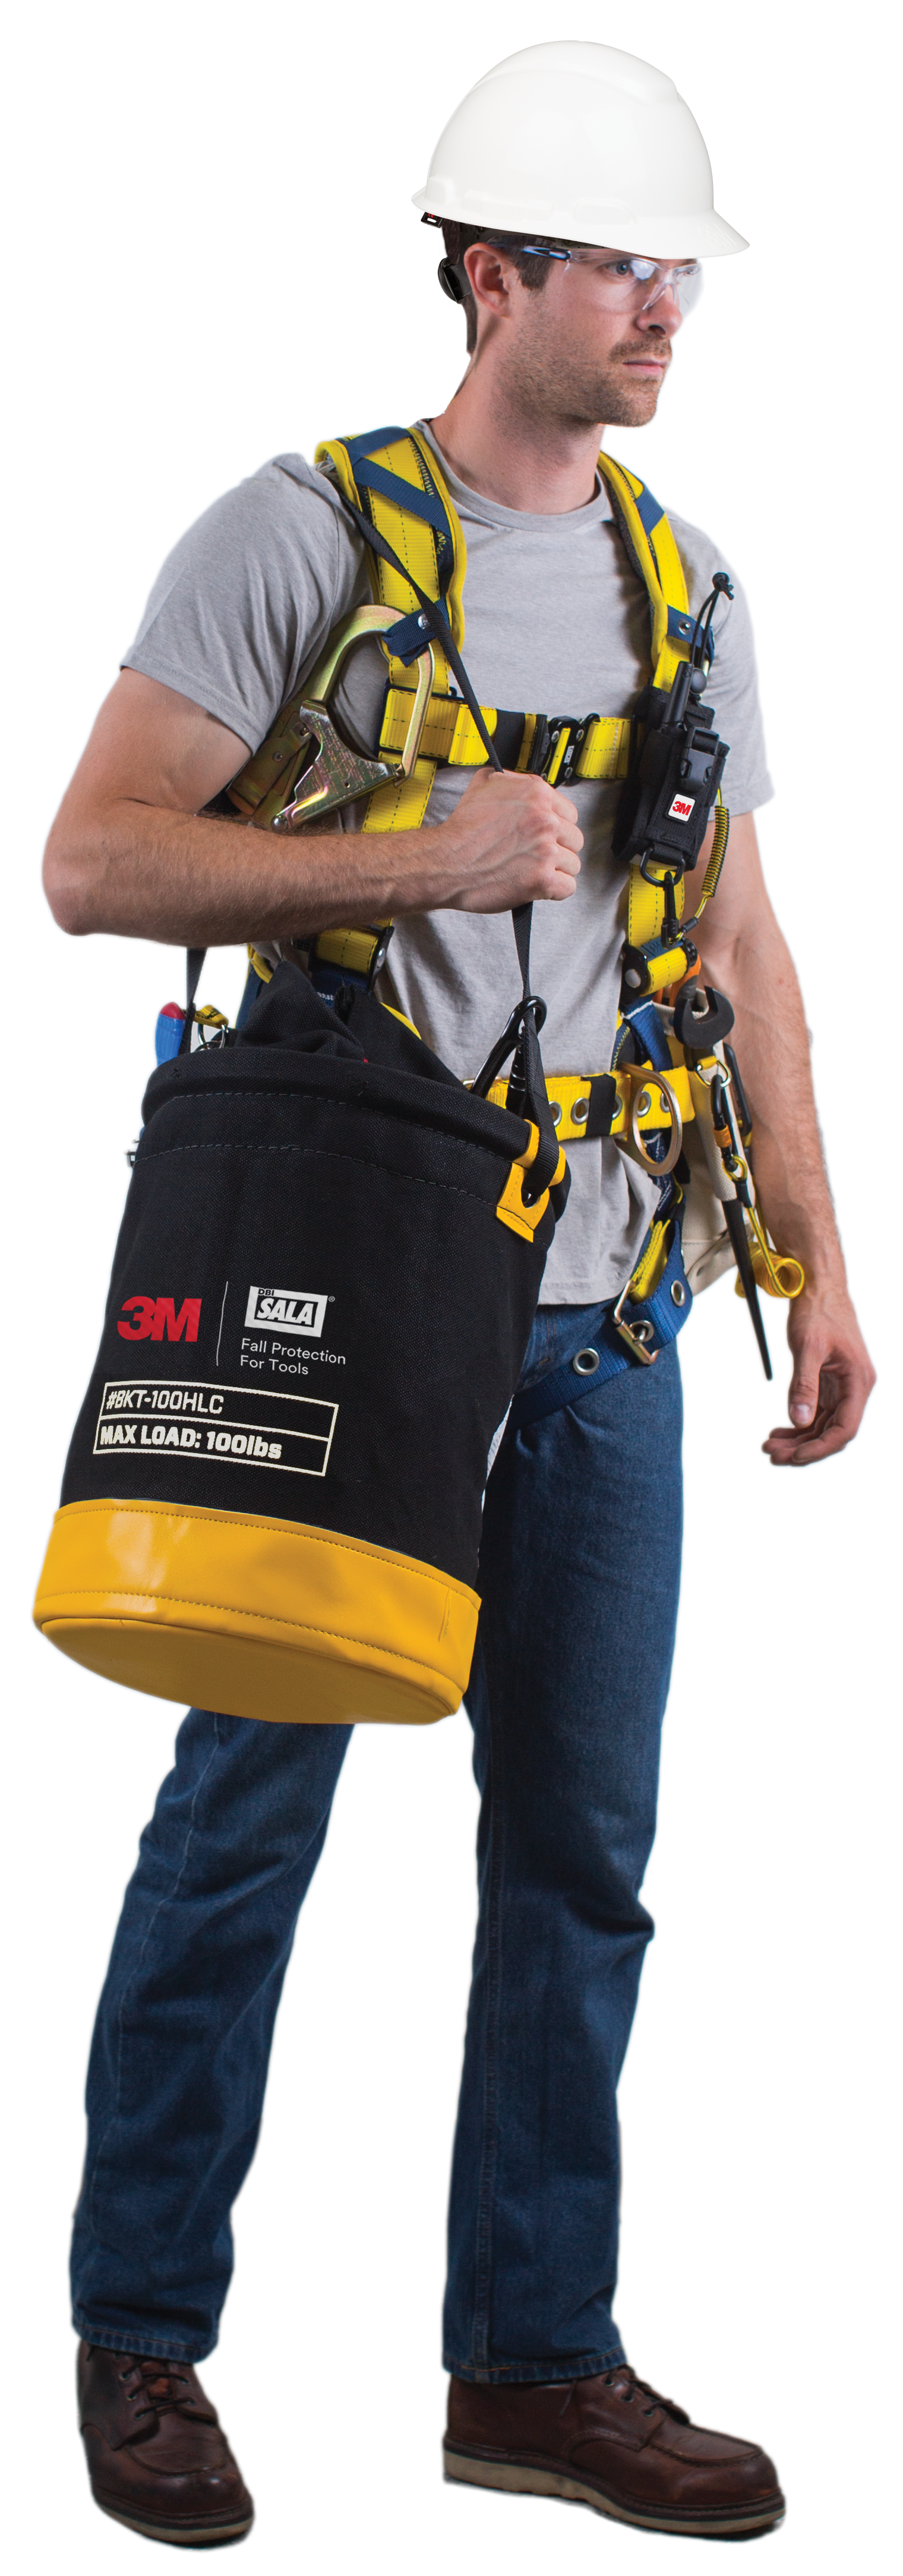 3M™ DBI-SALA® Long Safe Bucket 100 lb. Load Rated Hook and Loop